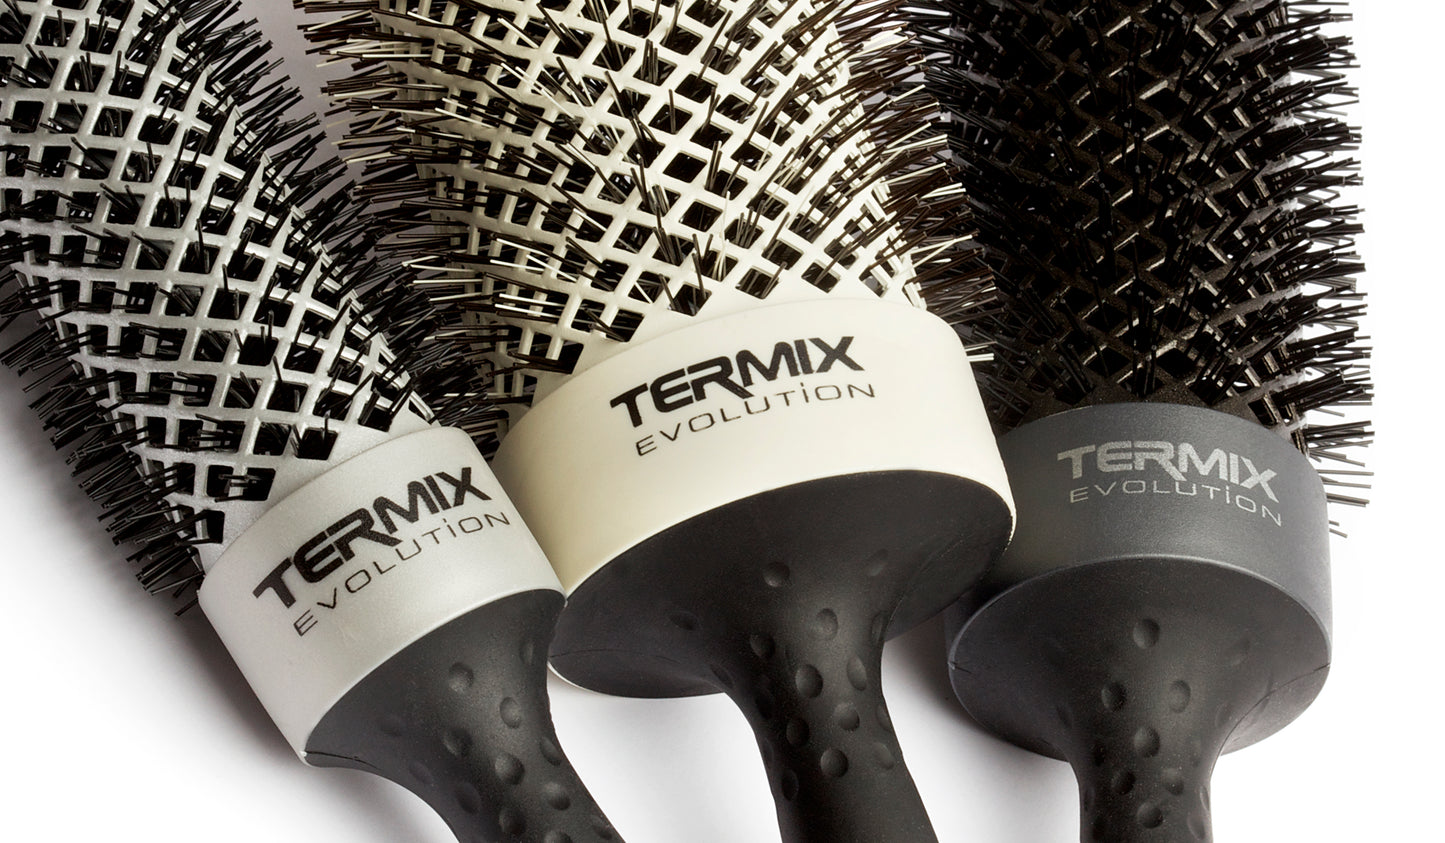 Termix Evolution Styling Brush 43mm